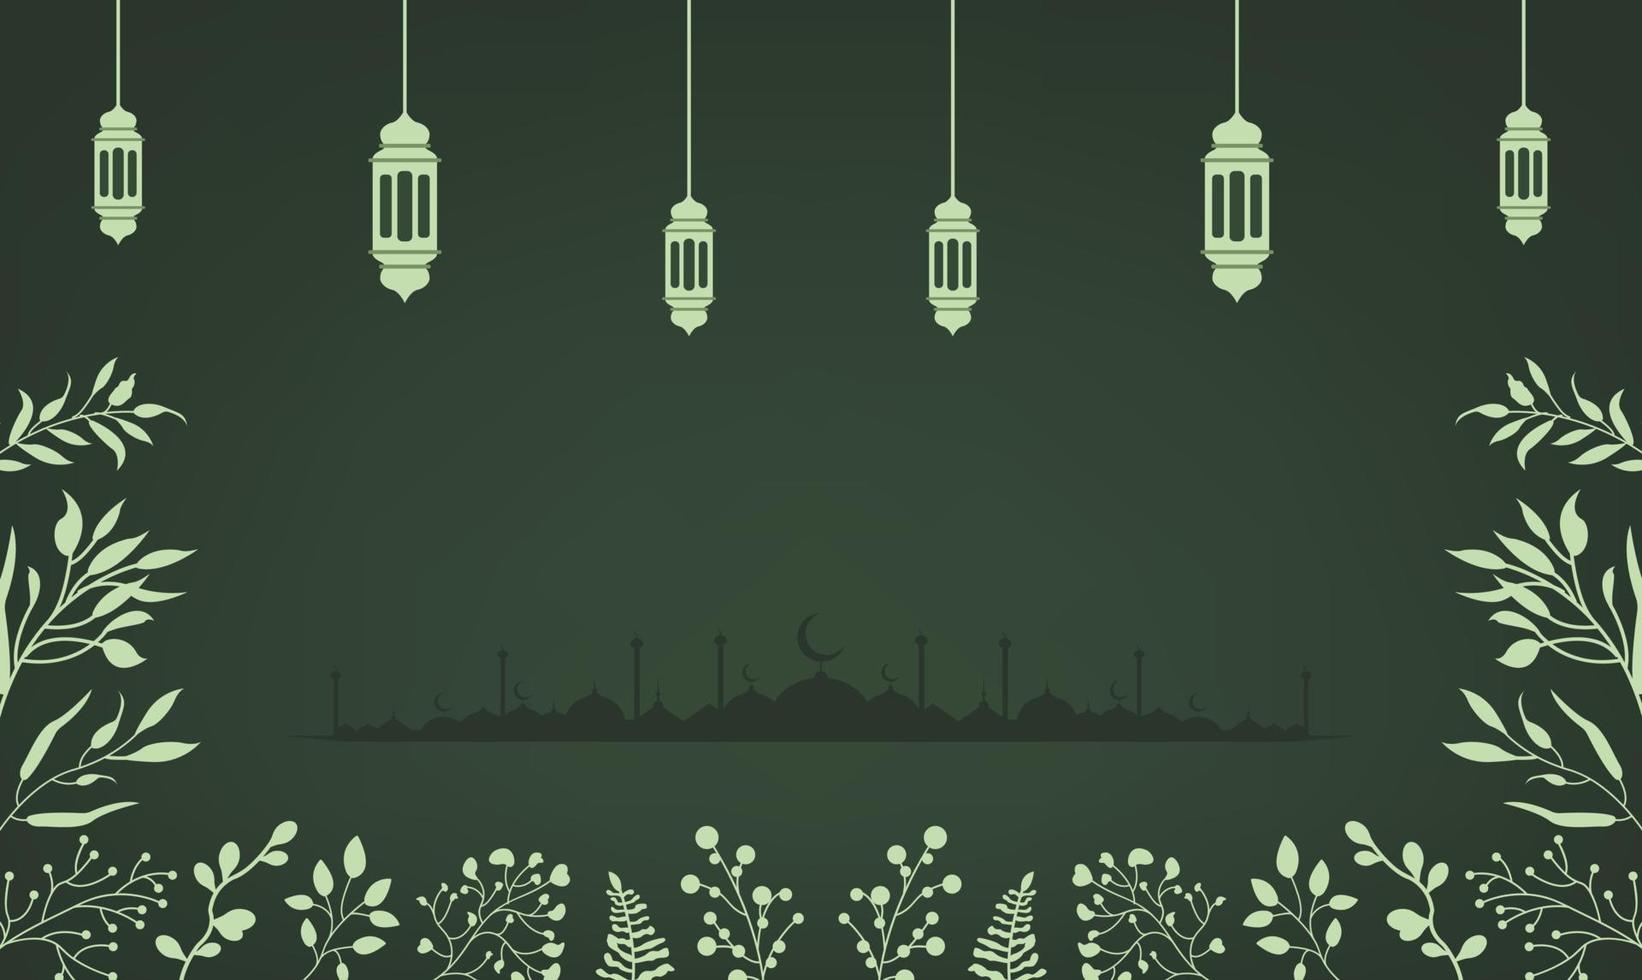 realista ramadan kareem ilustração plana eid al-fitr papel de parede mubarak vetor hari raya aidilfitri